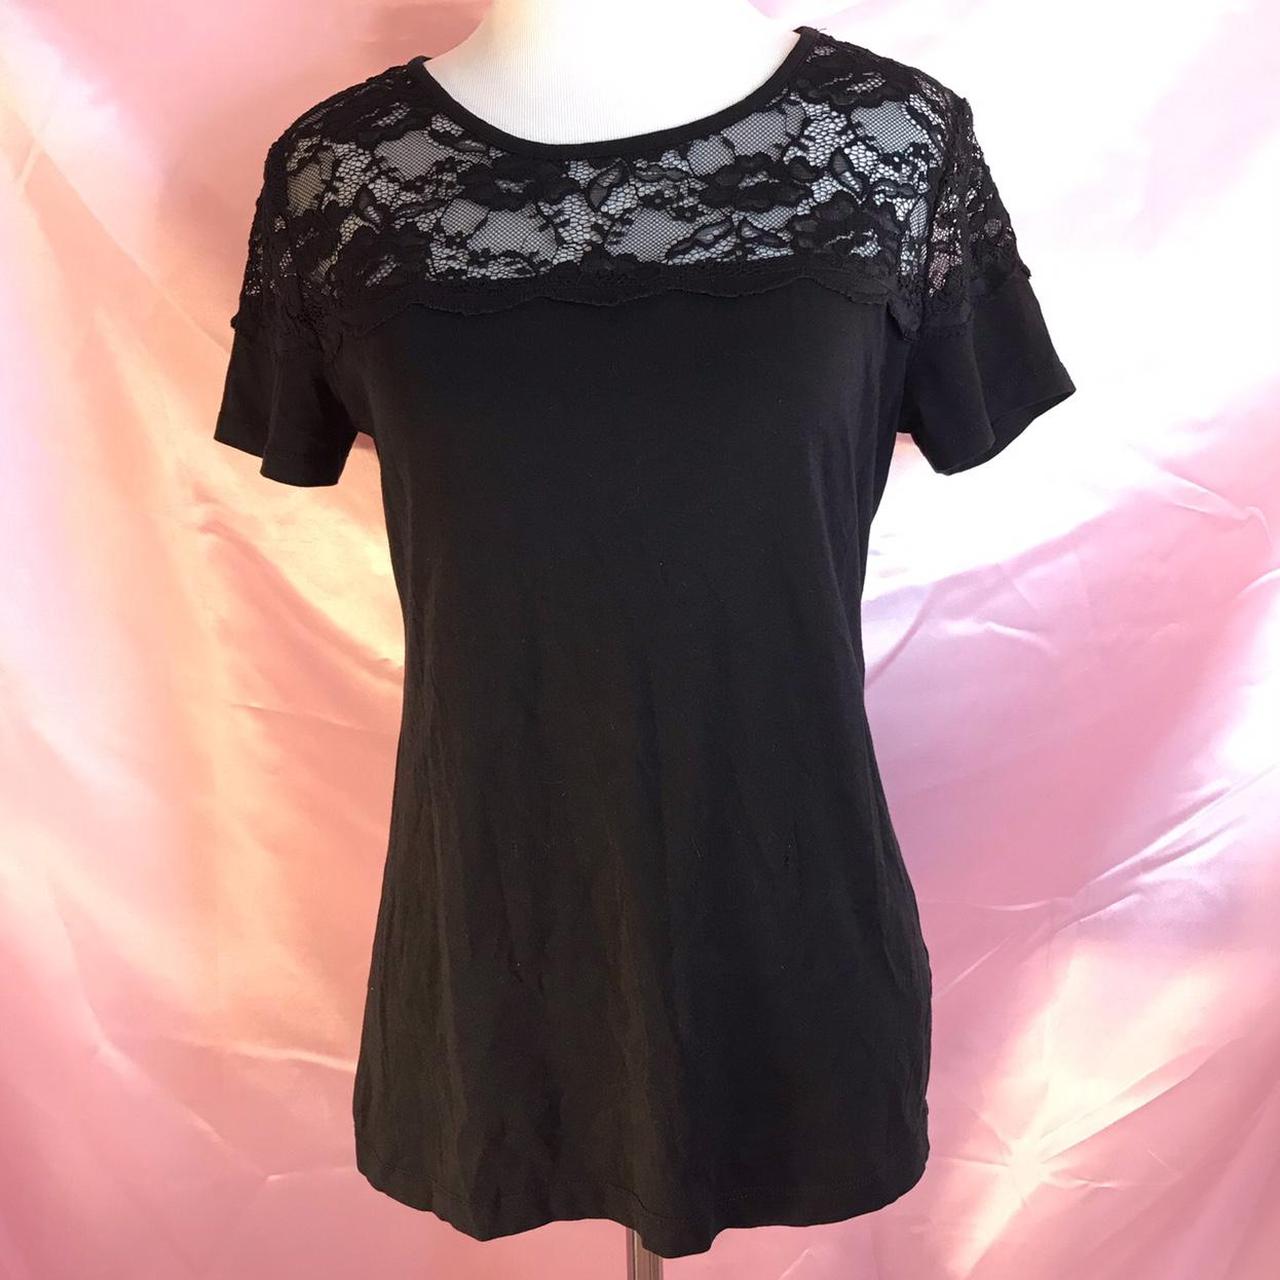 Product Image 1 - H&M black lace panel shirt